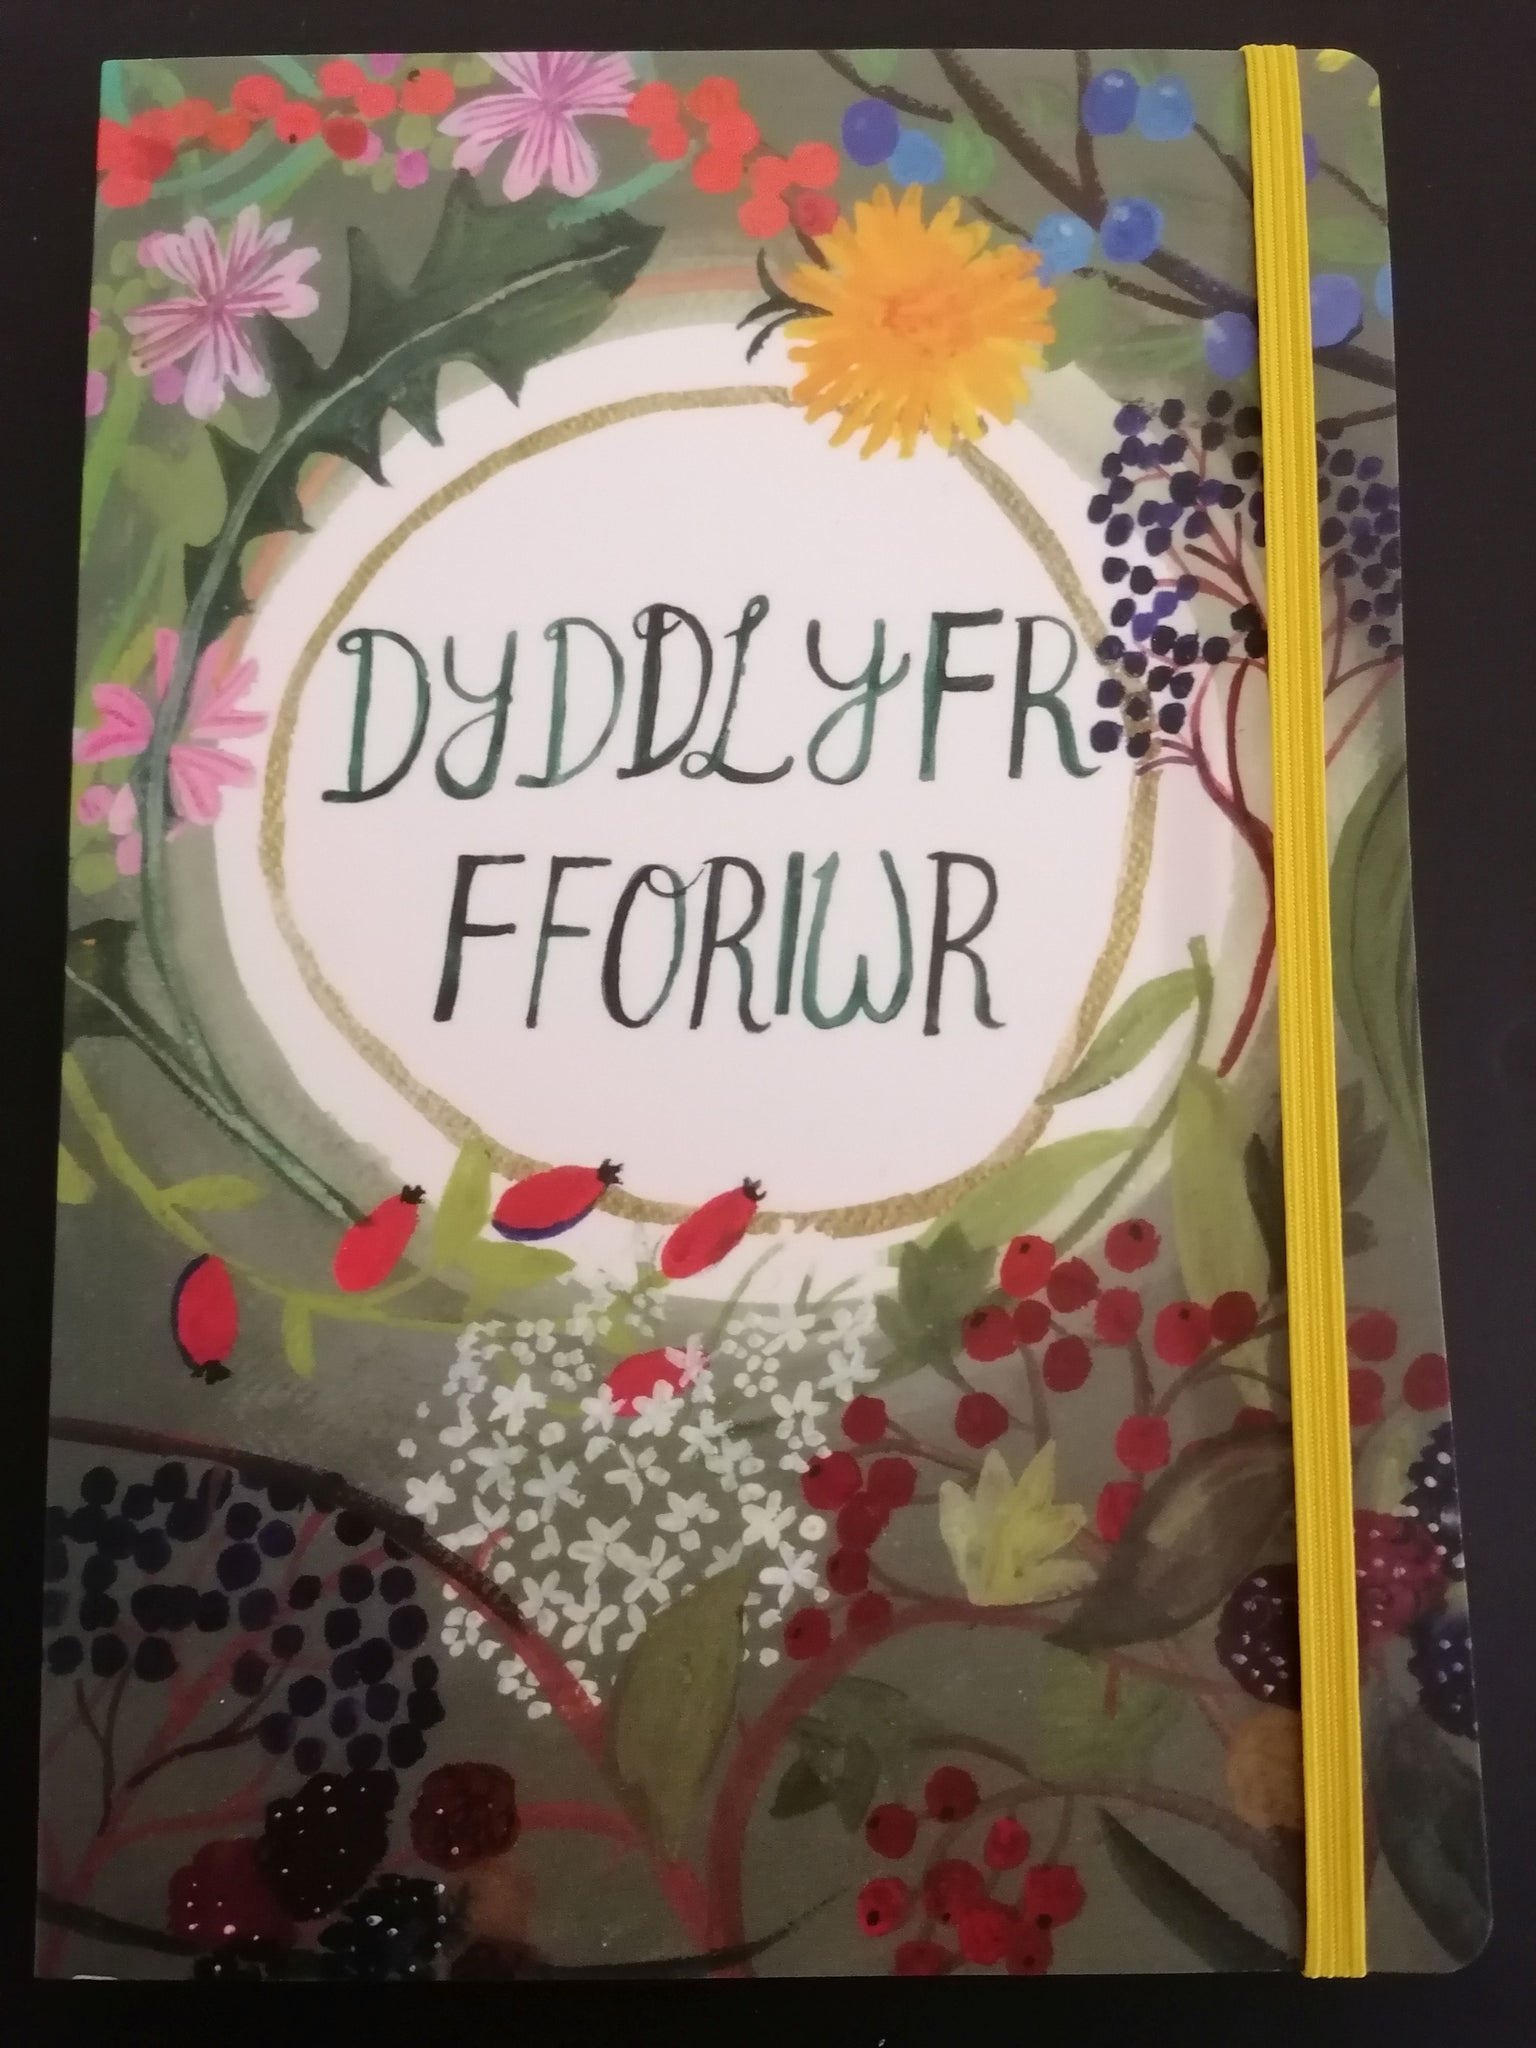 'Dyddlyfr Fforiwr' (A Forager's Journal) Notebook by Lizzie Spikes